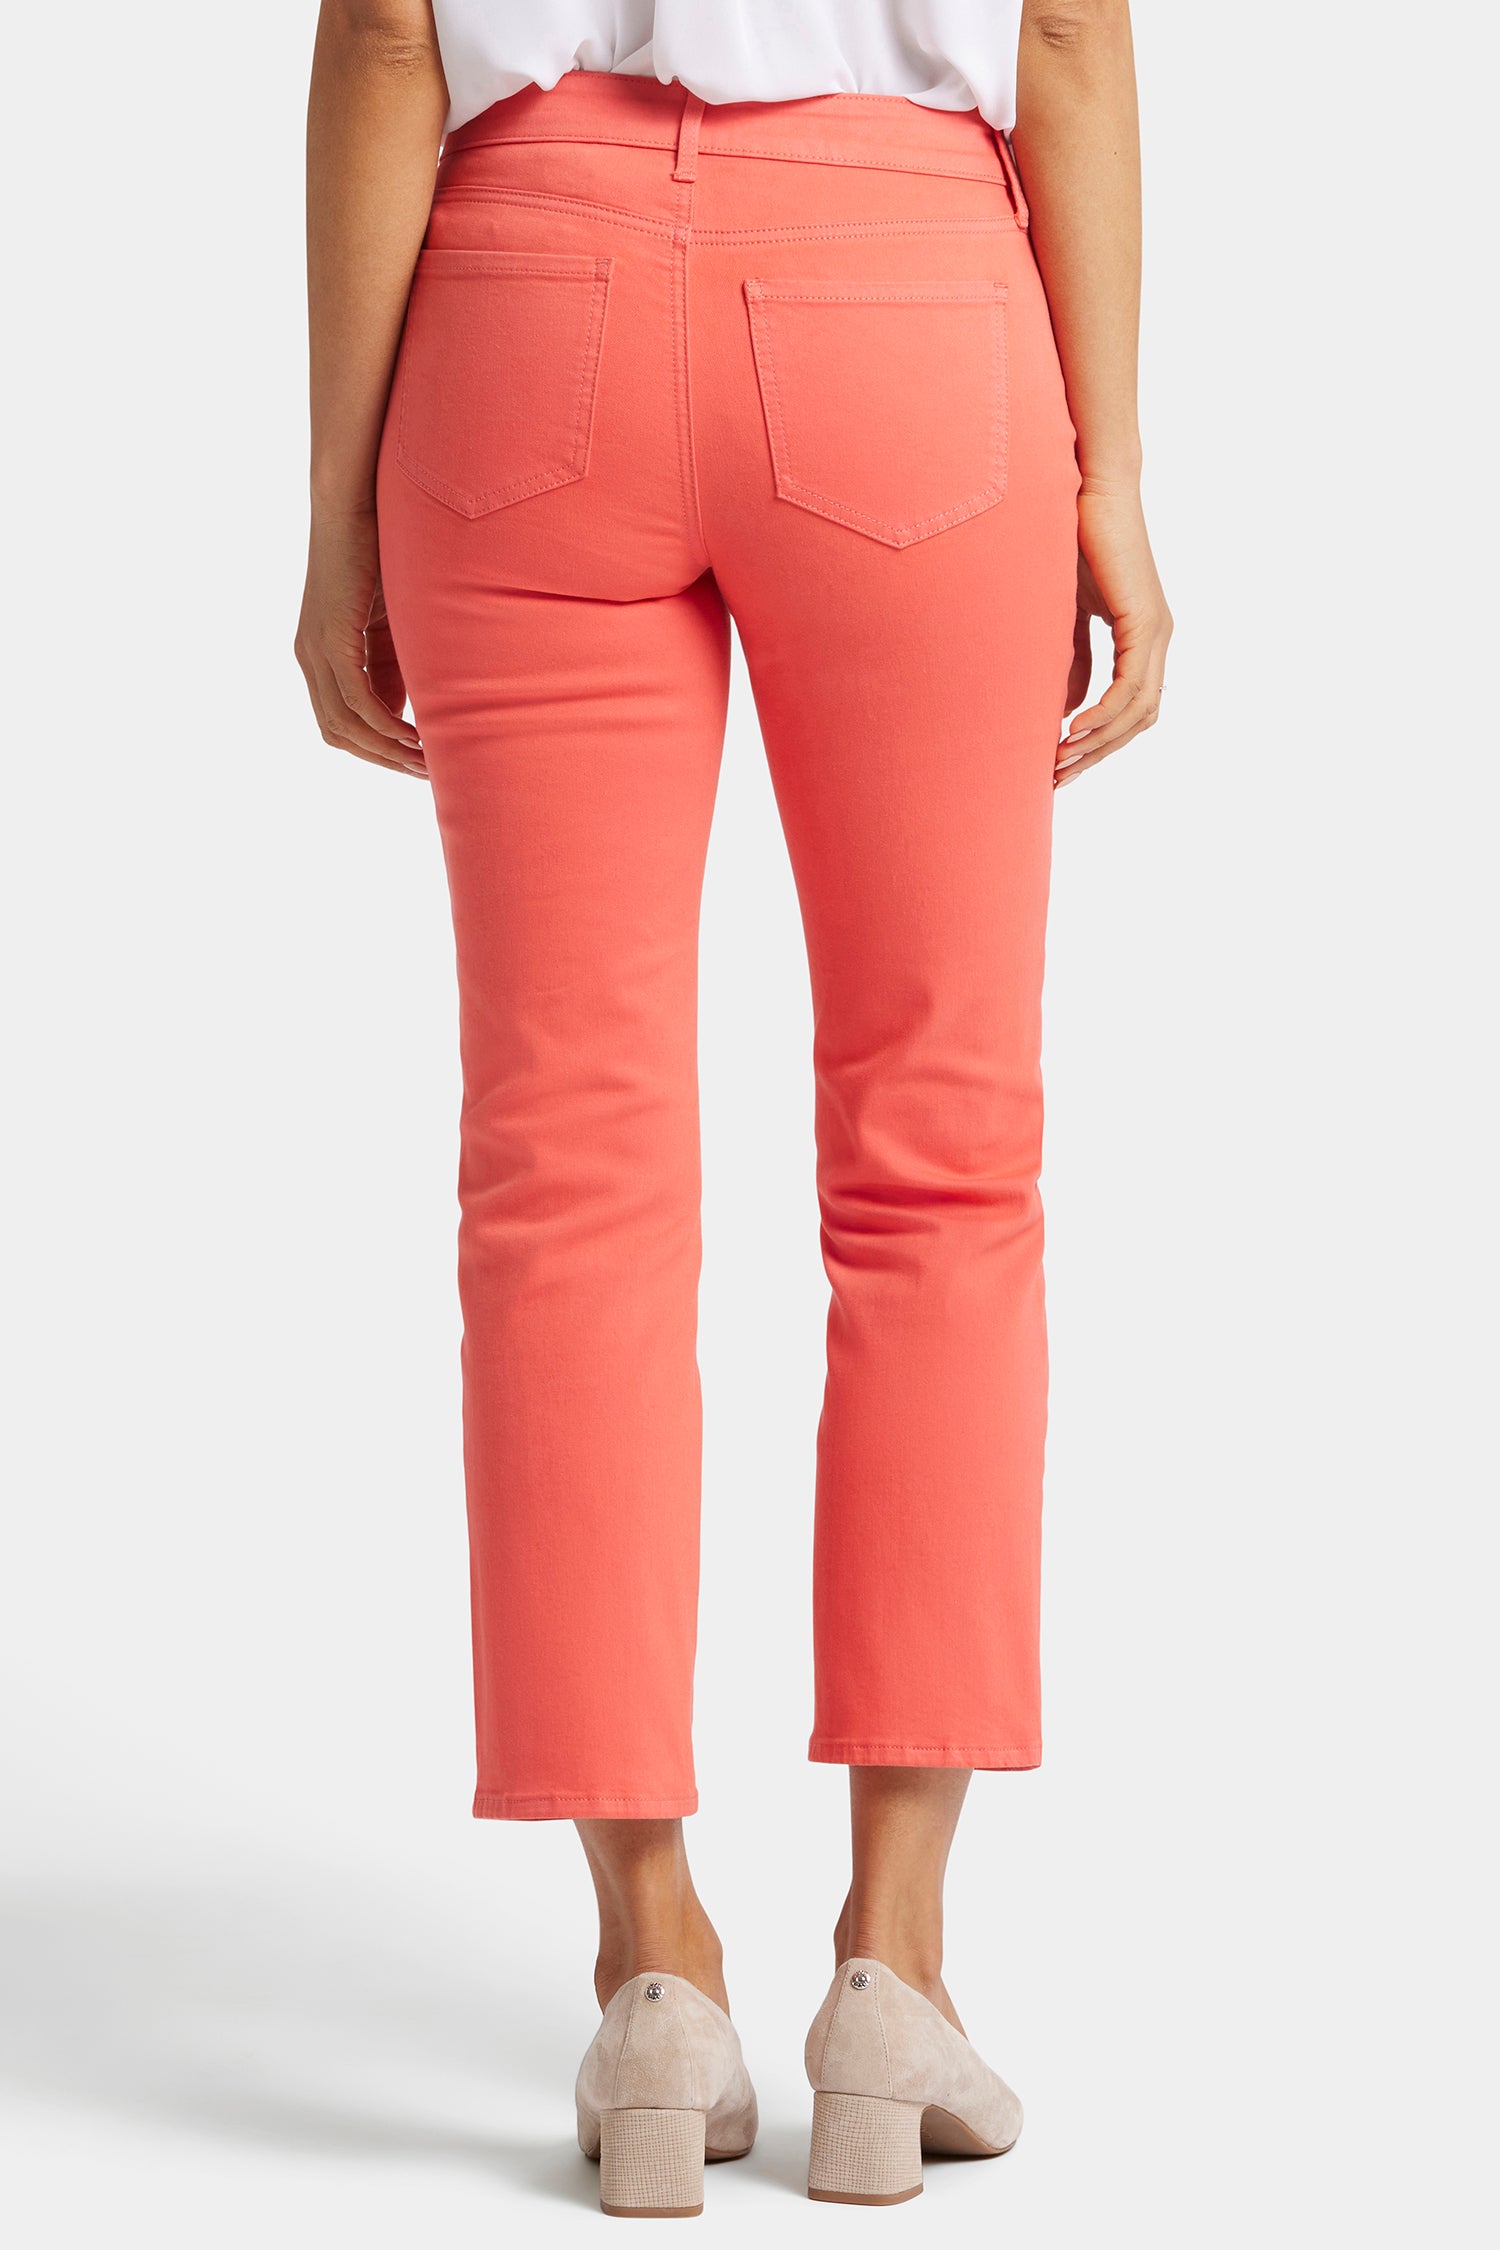 Marilyn Straight Ankle Jeans - Fruit Punch Orange | NYDJ